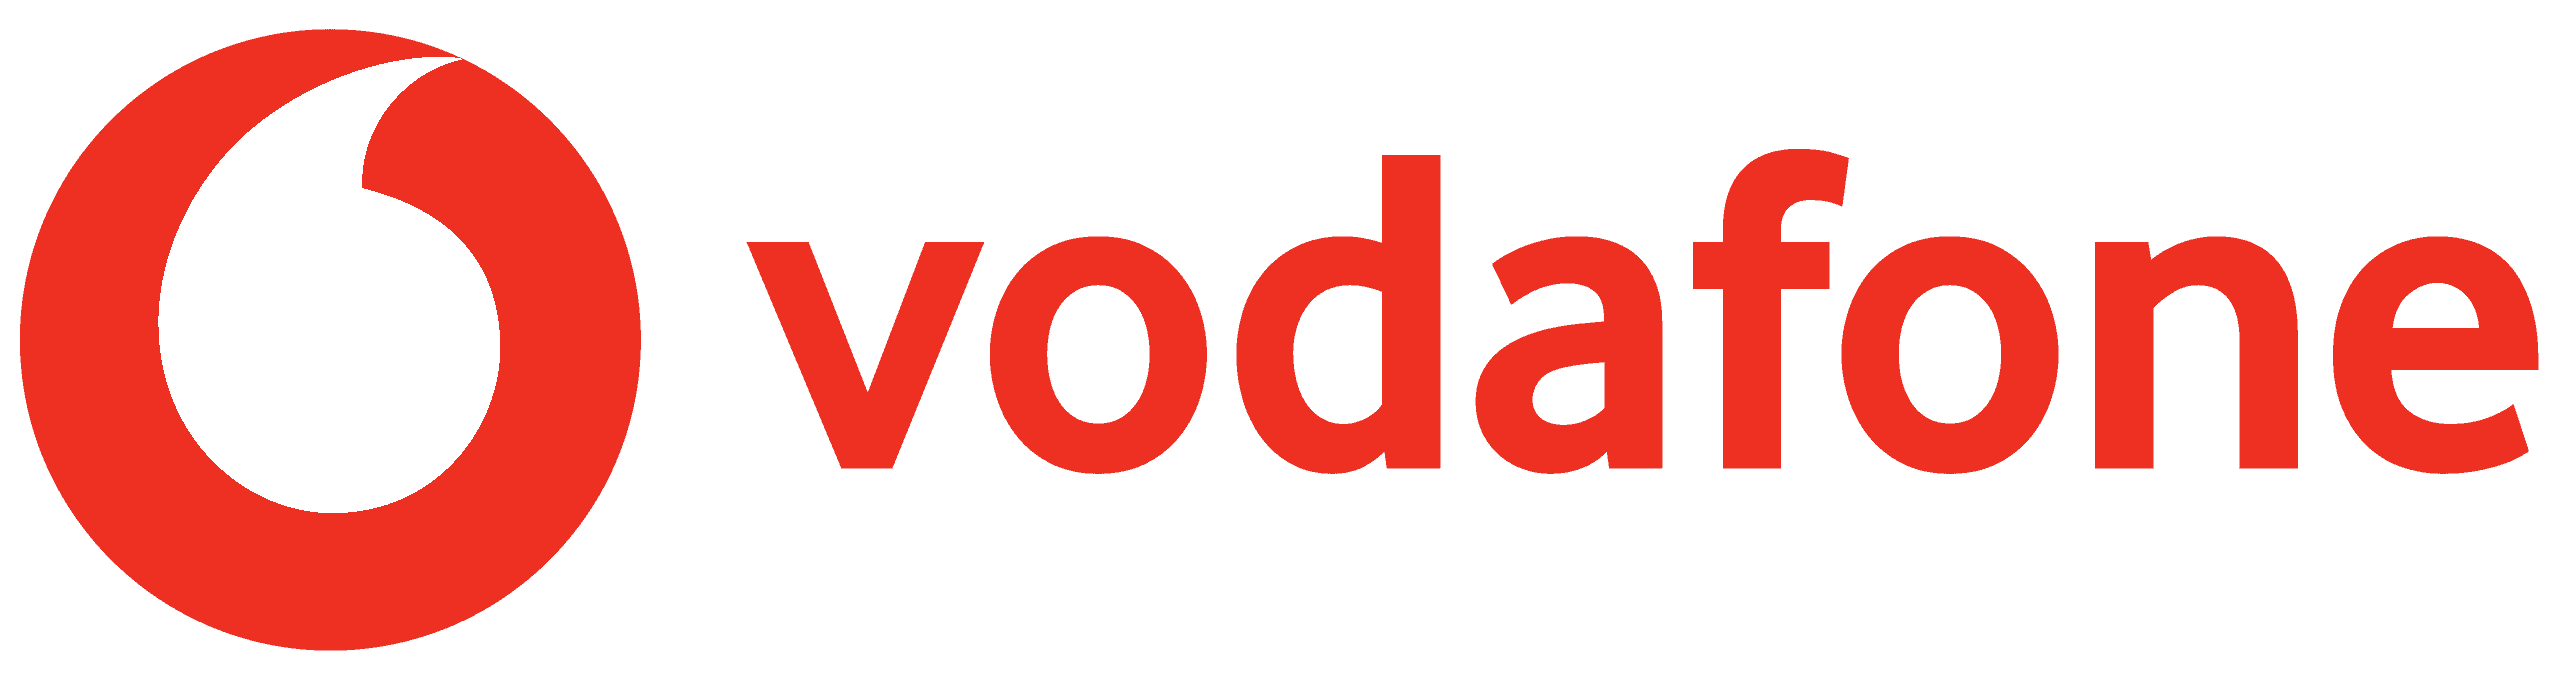 Vodafone student discounts logo